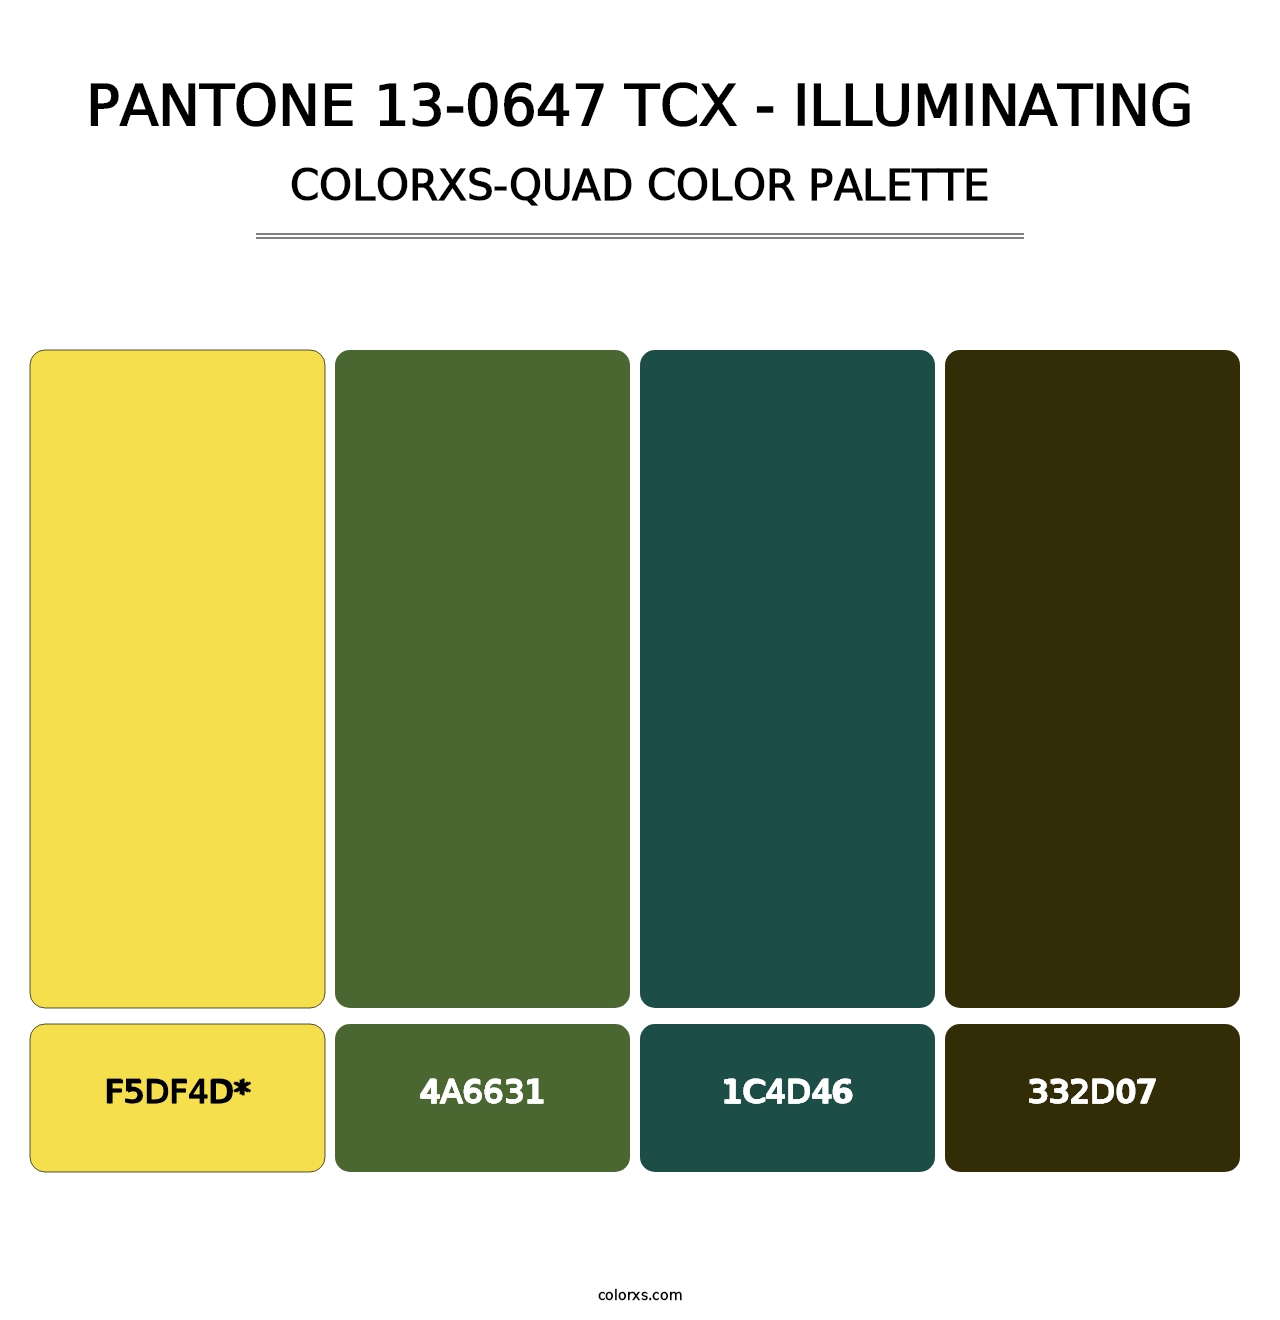 PANTONE 13-0647 TCX - Illuminating - Colorxs Quad Palette